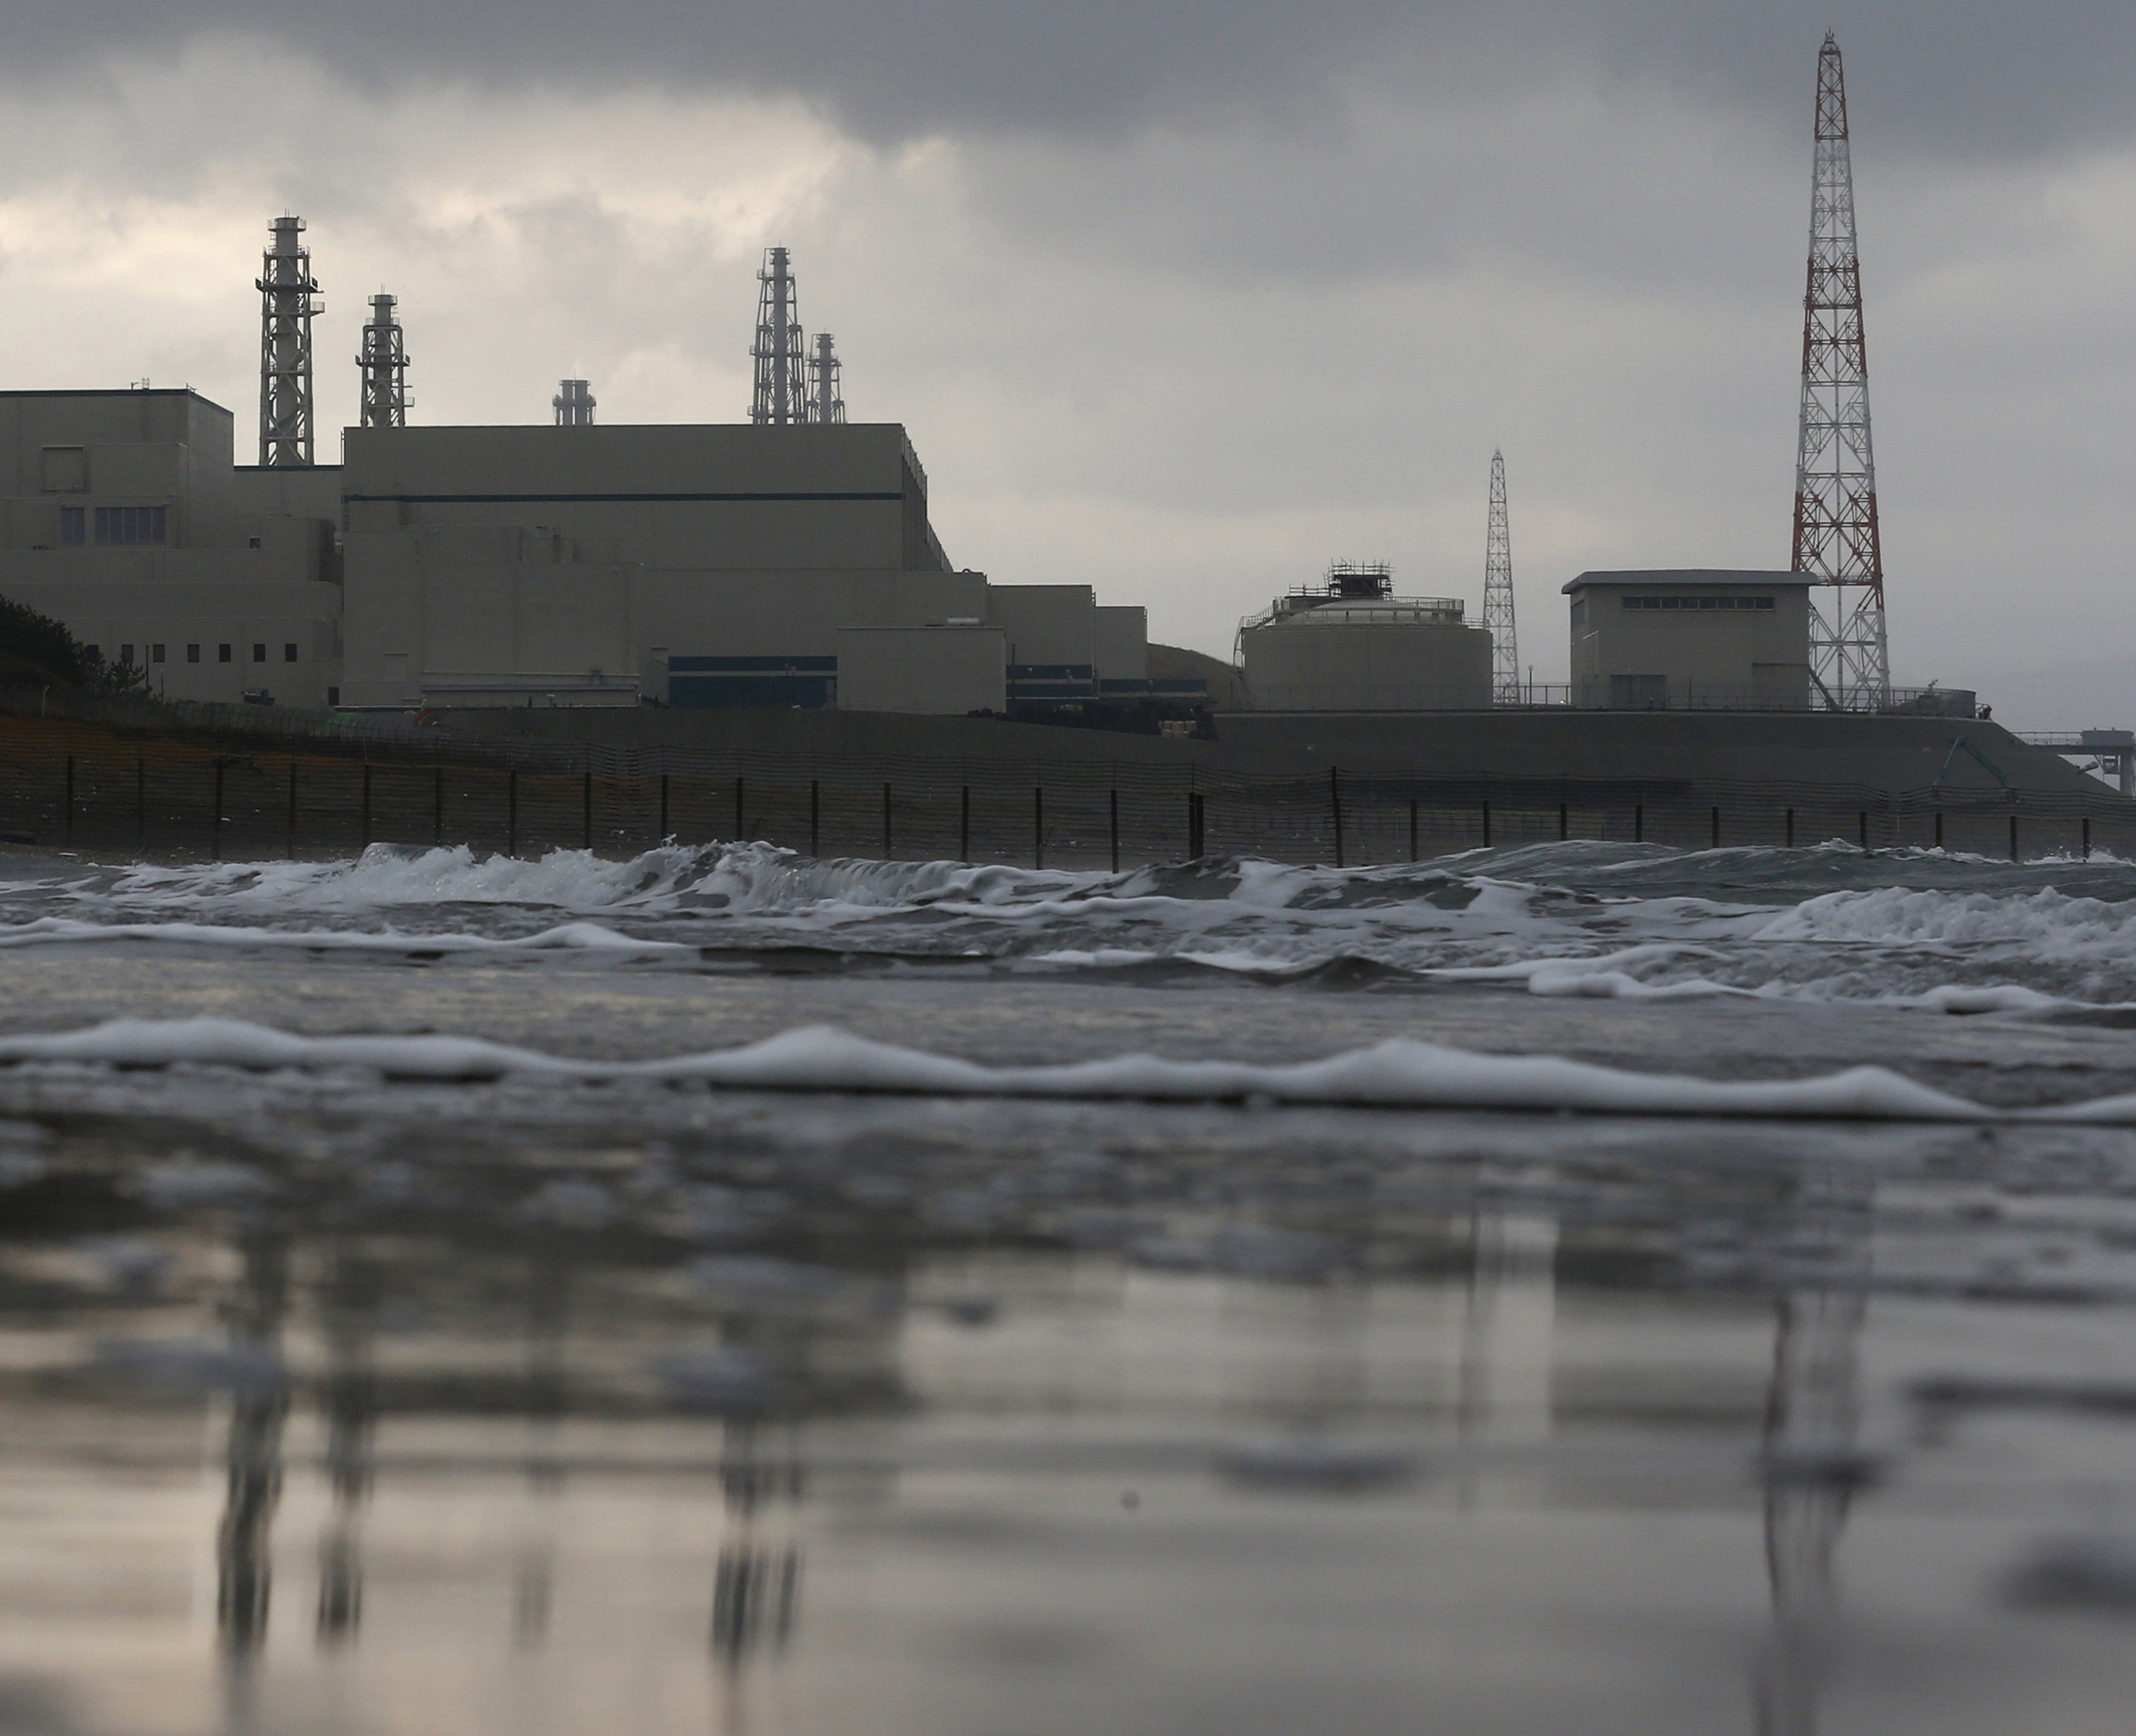 Tokyo Electric Power Co.'s Kashiwazaki Kariwa nuclear power plant is seen from a seaside in Kashiwazaki